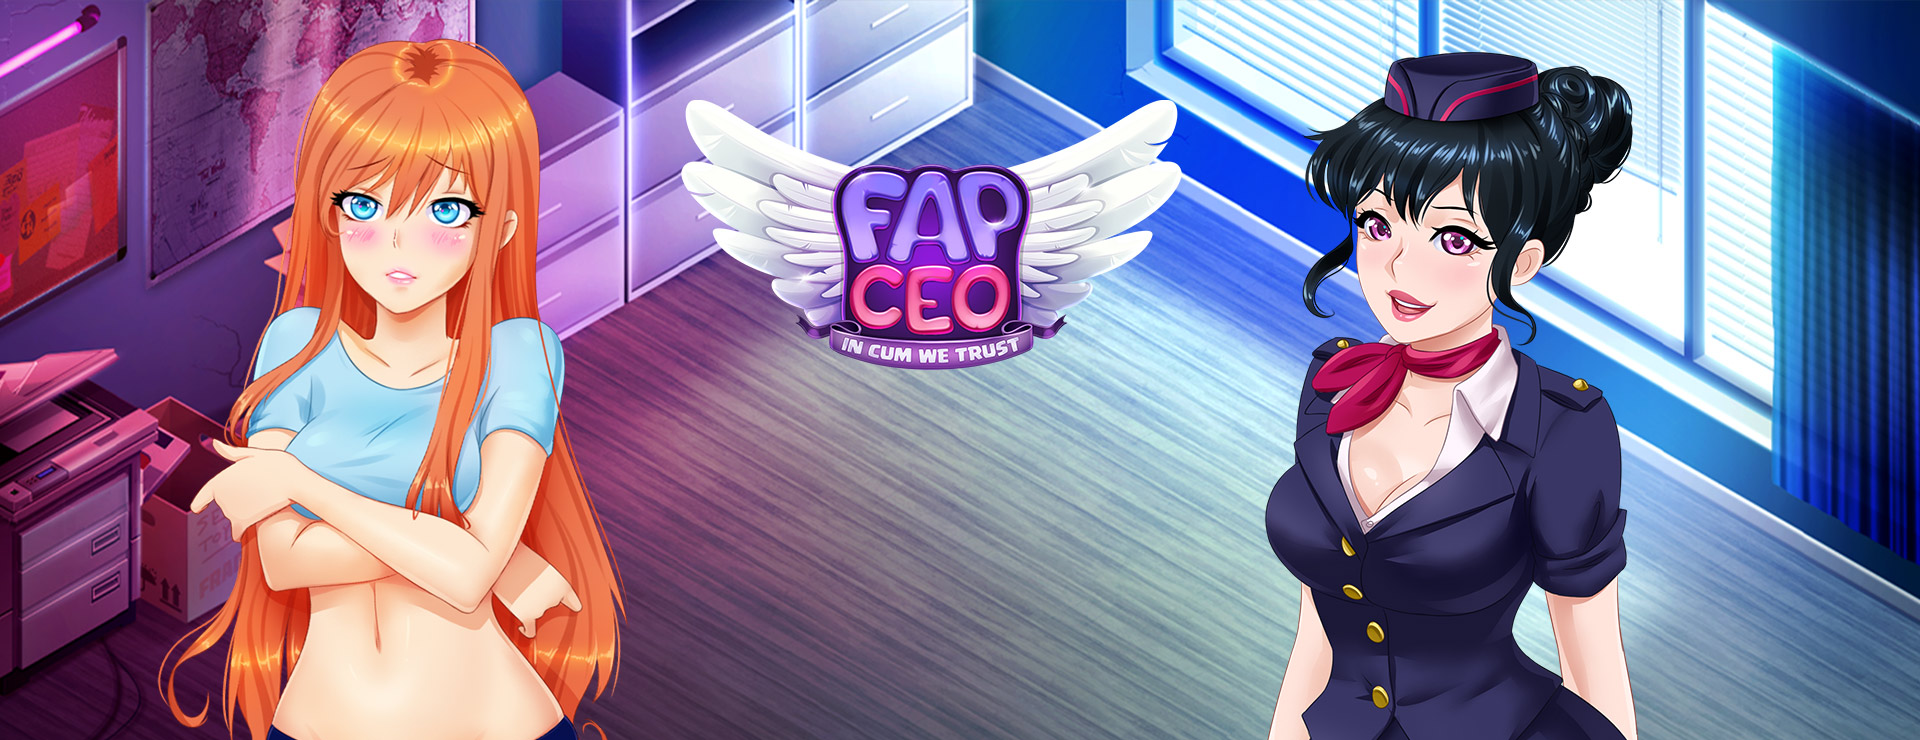 Fap CEO Game - Simulation Game